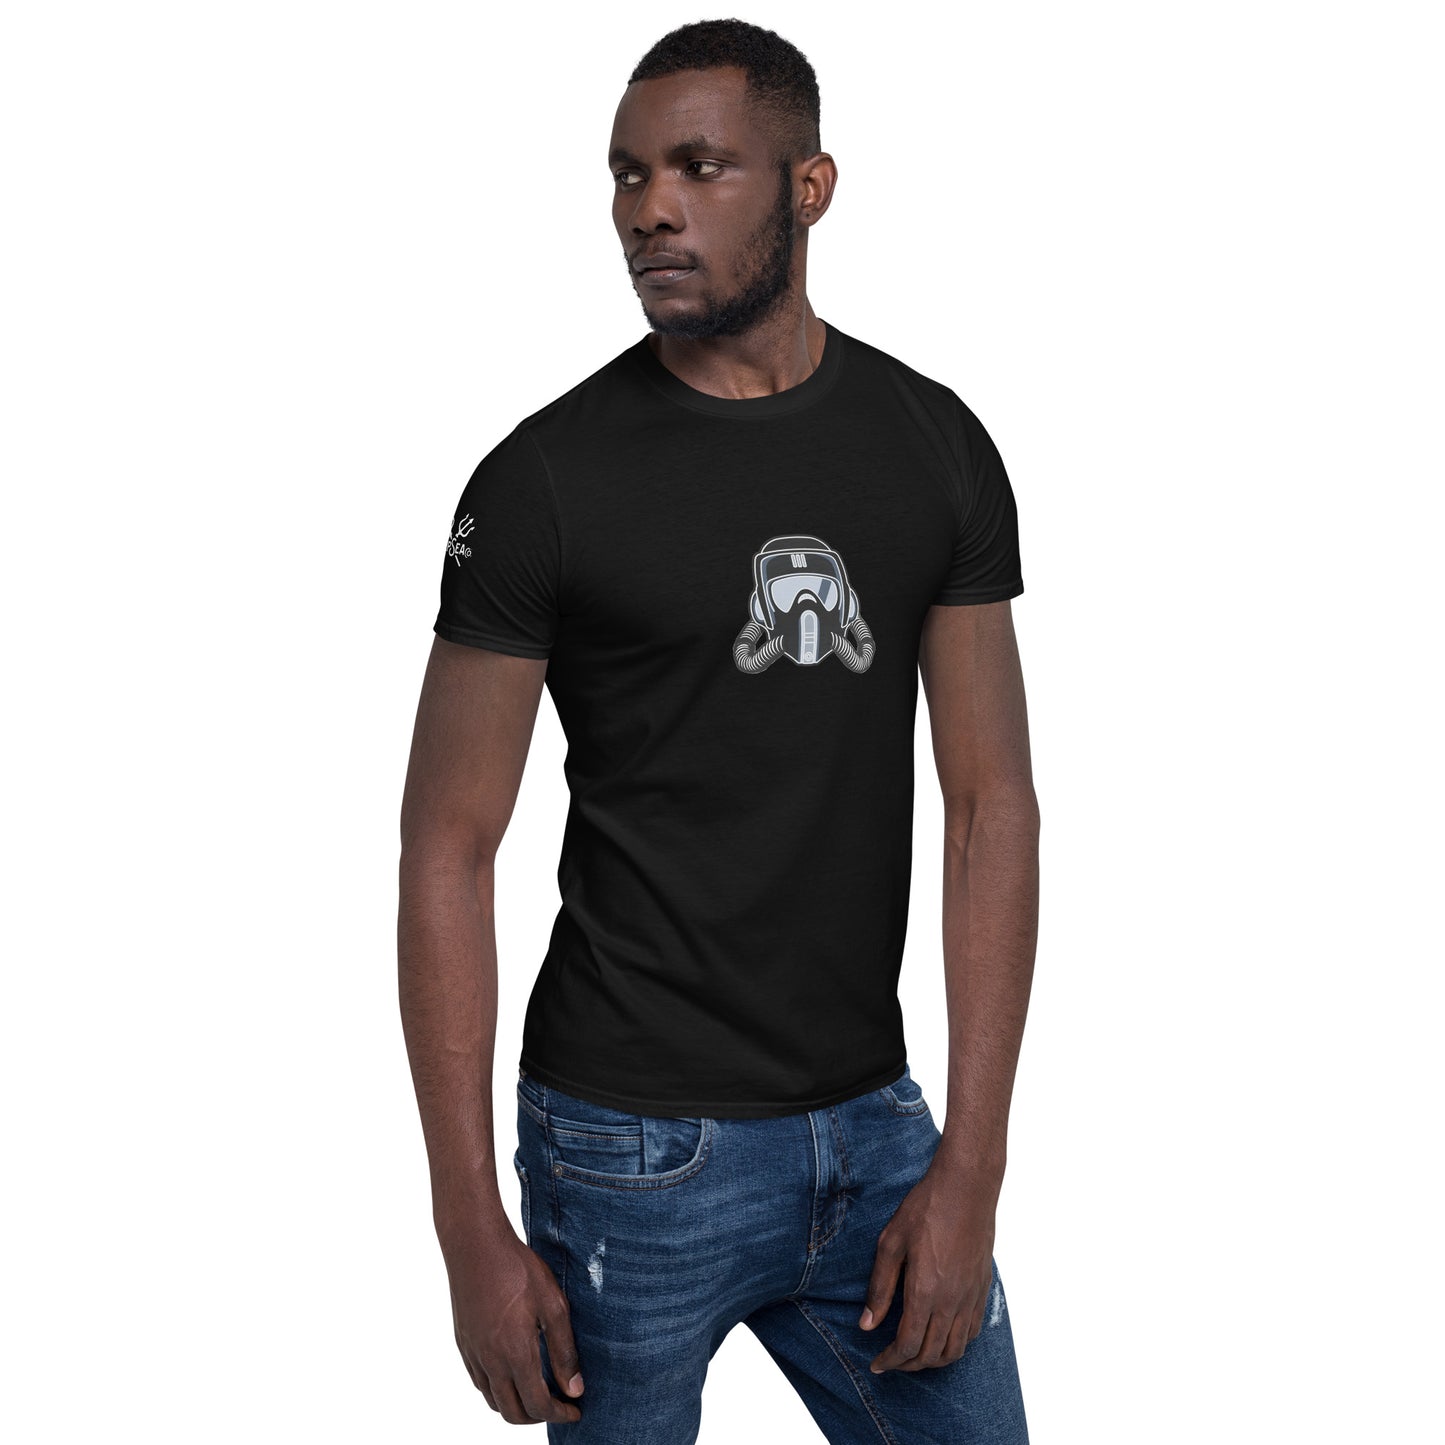 DeepSea Trooper Short-Sleeve Unisex T-Shirt